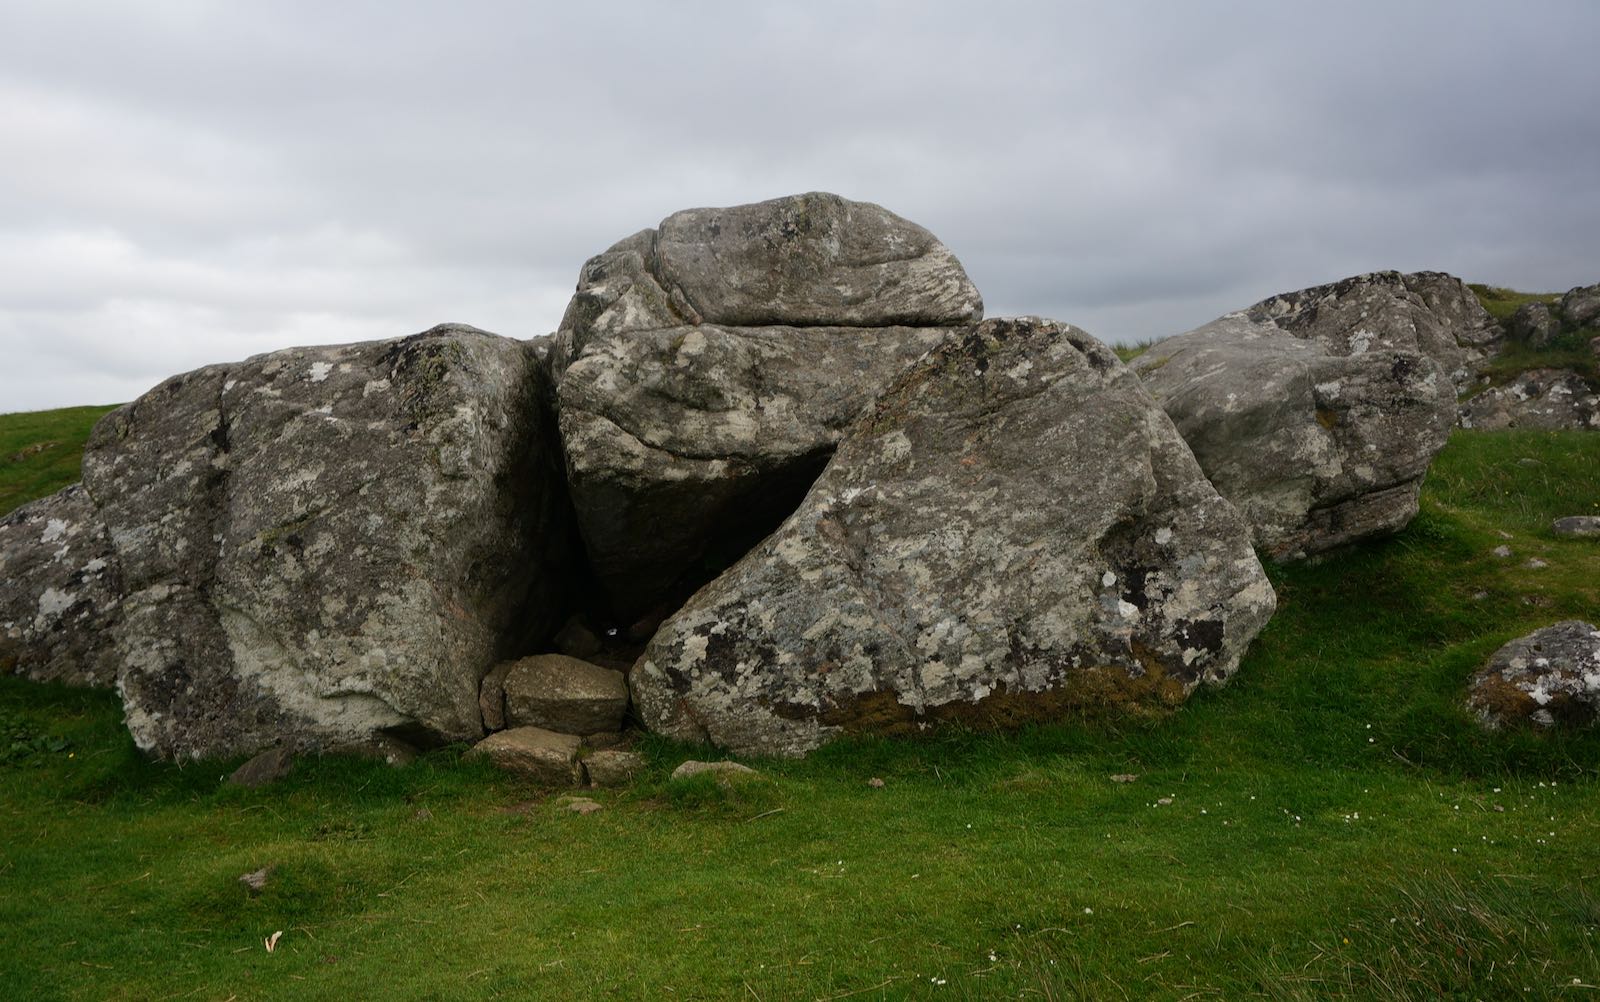 Rocky outcrop on Scottish island